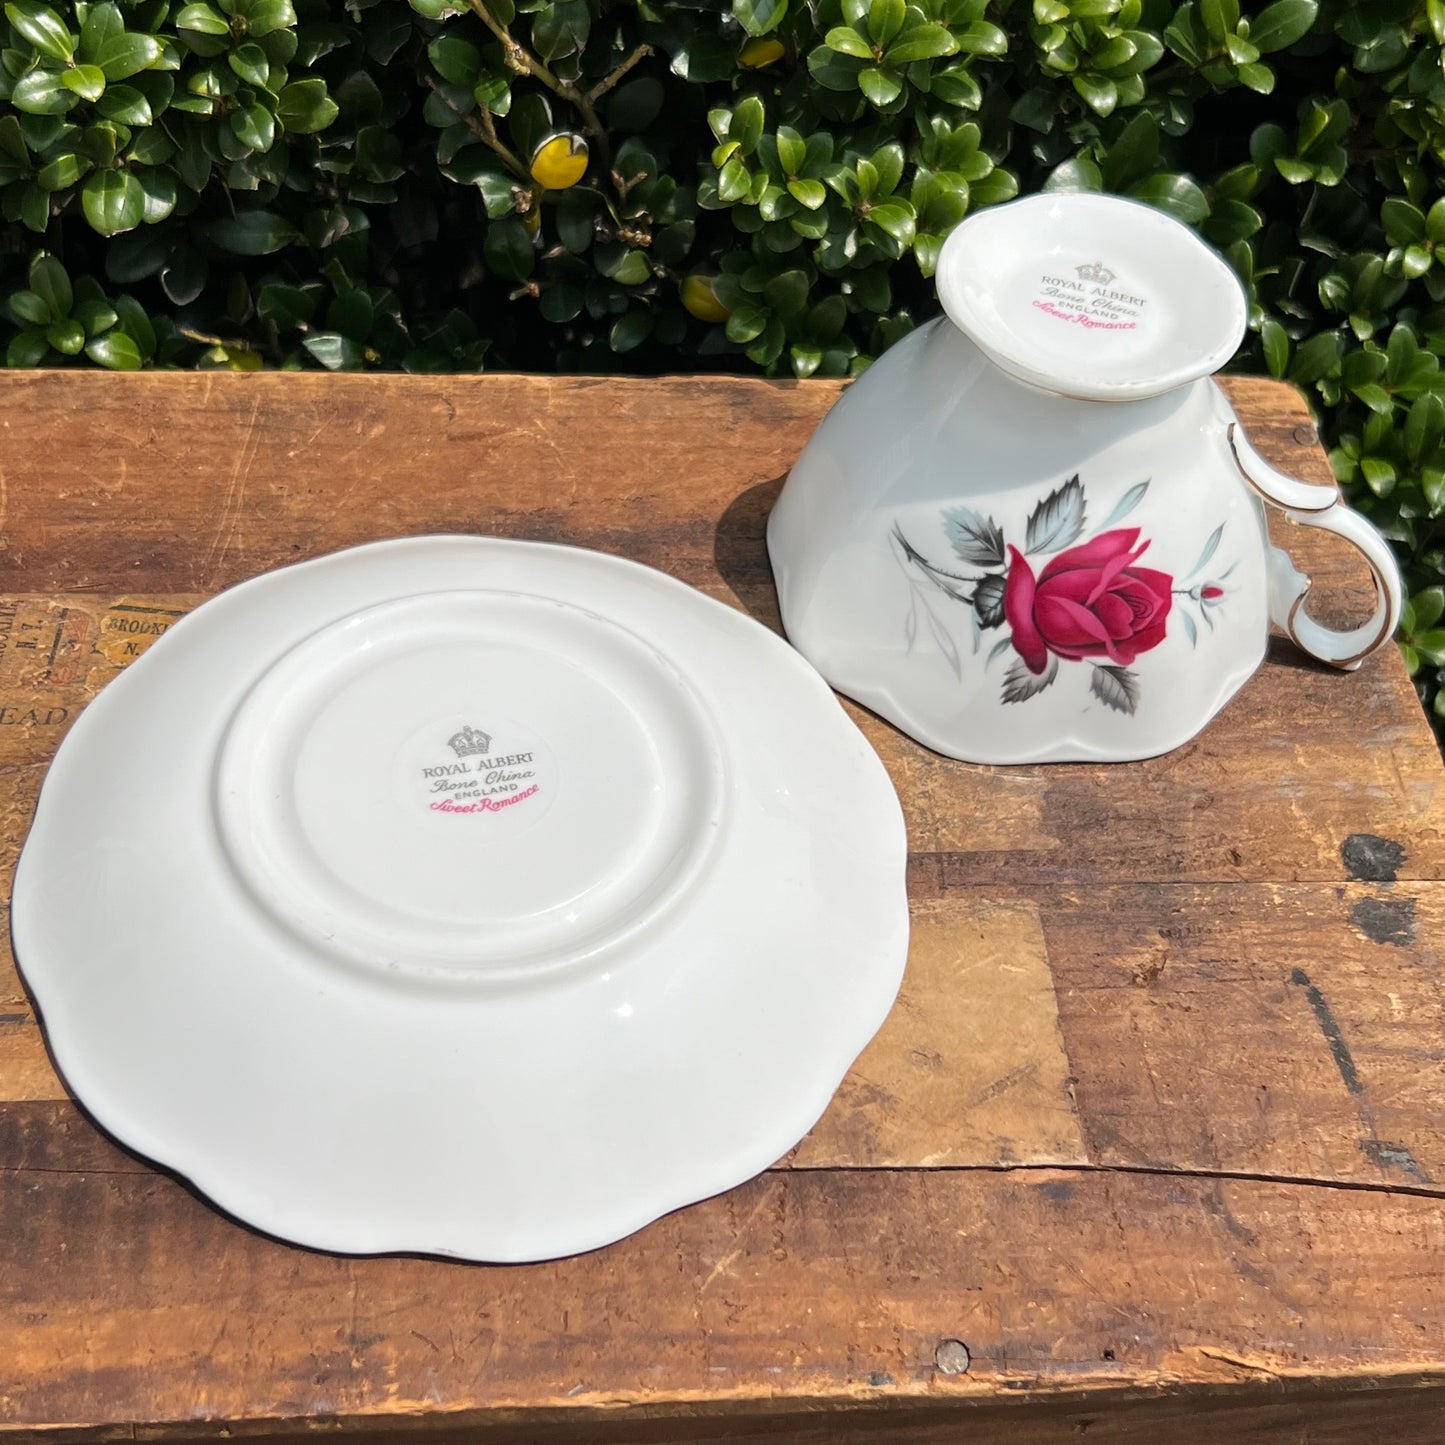 Vintage Sweet Romance Royal Albert English Bone China Tea Cup & Saucer